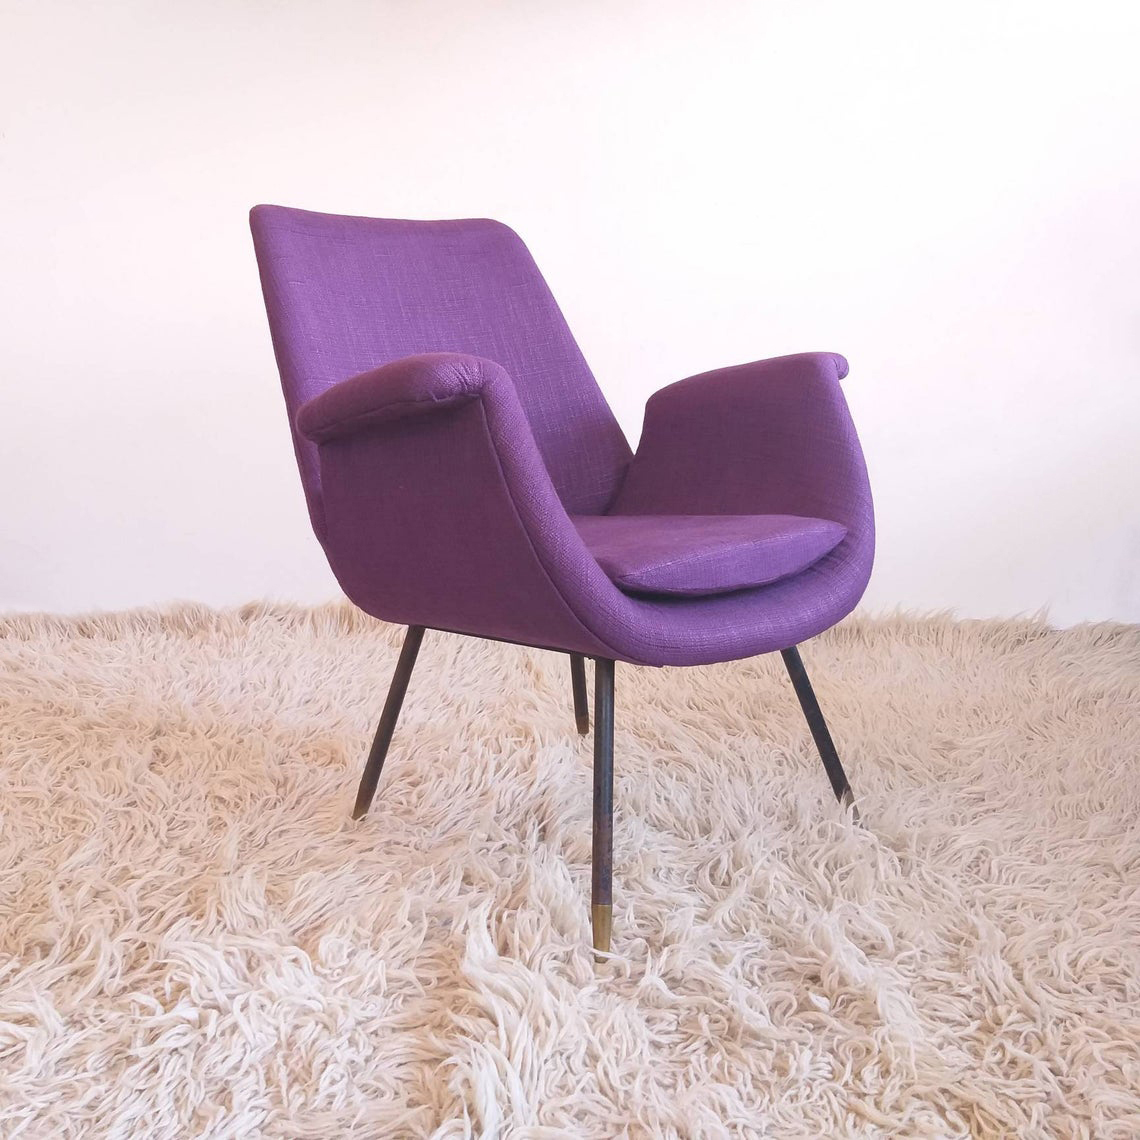 Vintage Italian Lounge Chair, Gastone Rinaldi Design, 50s